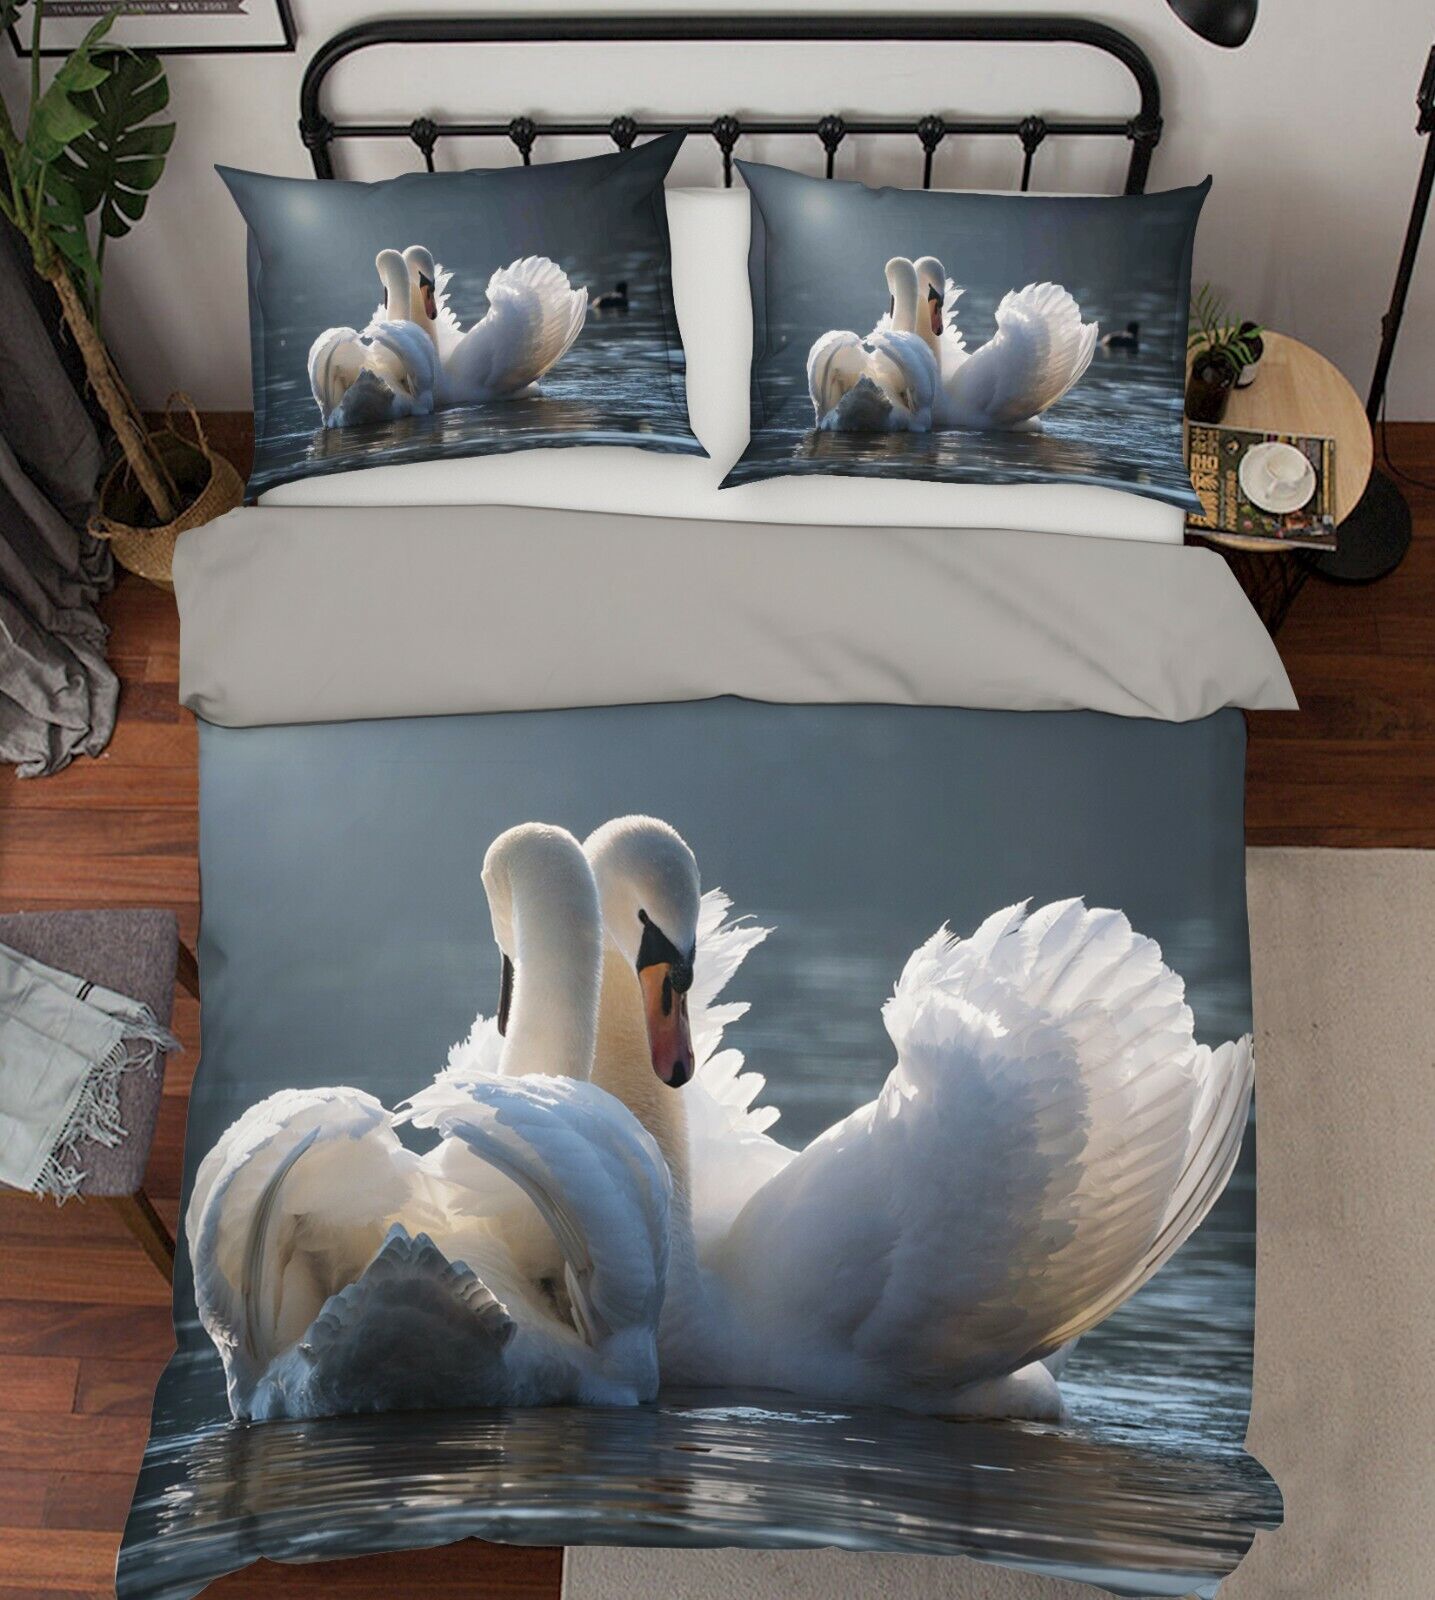 3D Swan I97 Animal Bed Pillowcases Quilt Duvet Cover Queen King Angelia Ograniczona WYPRZEDAŻ